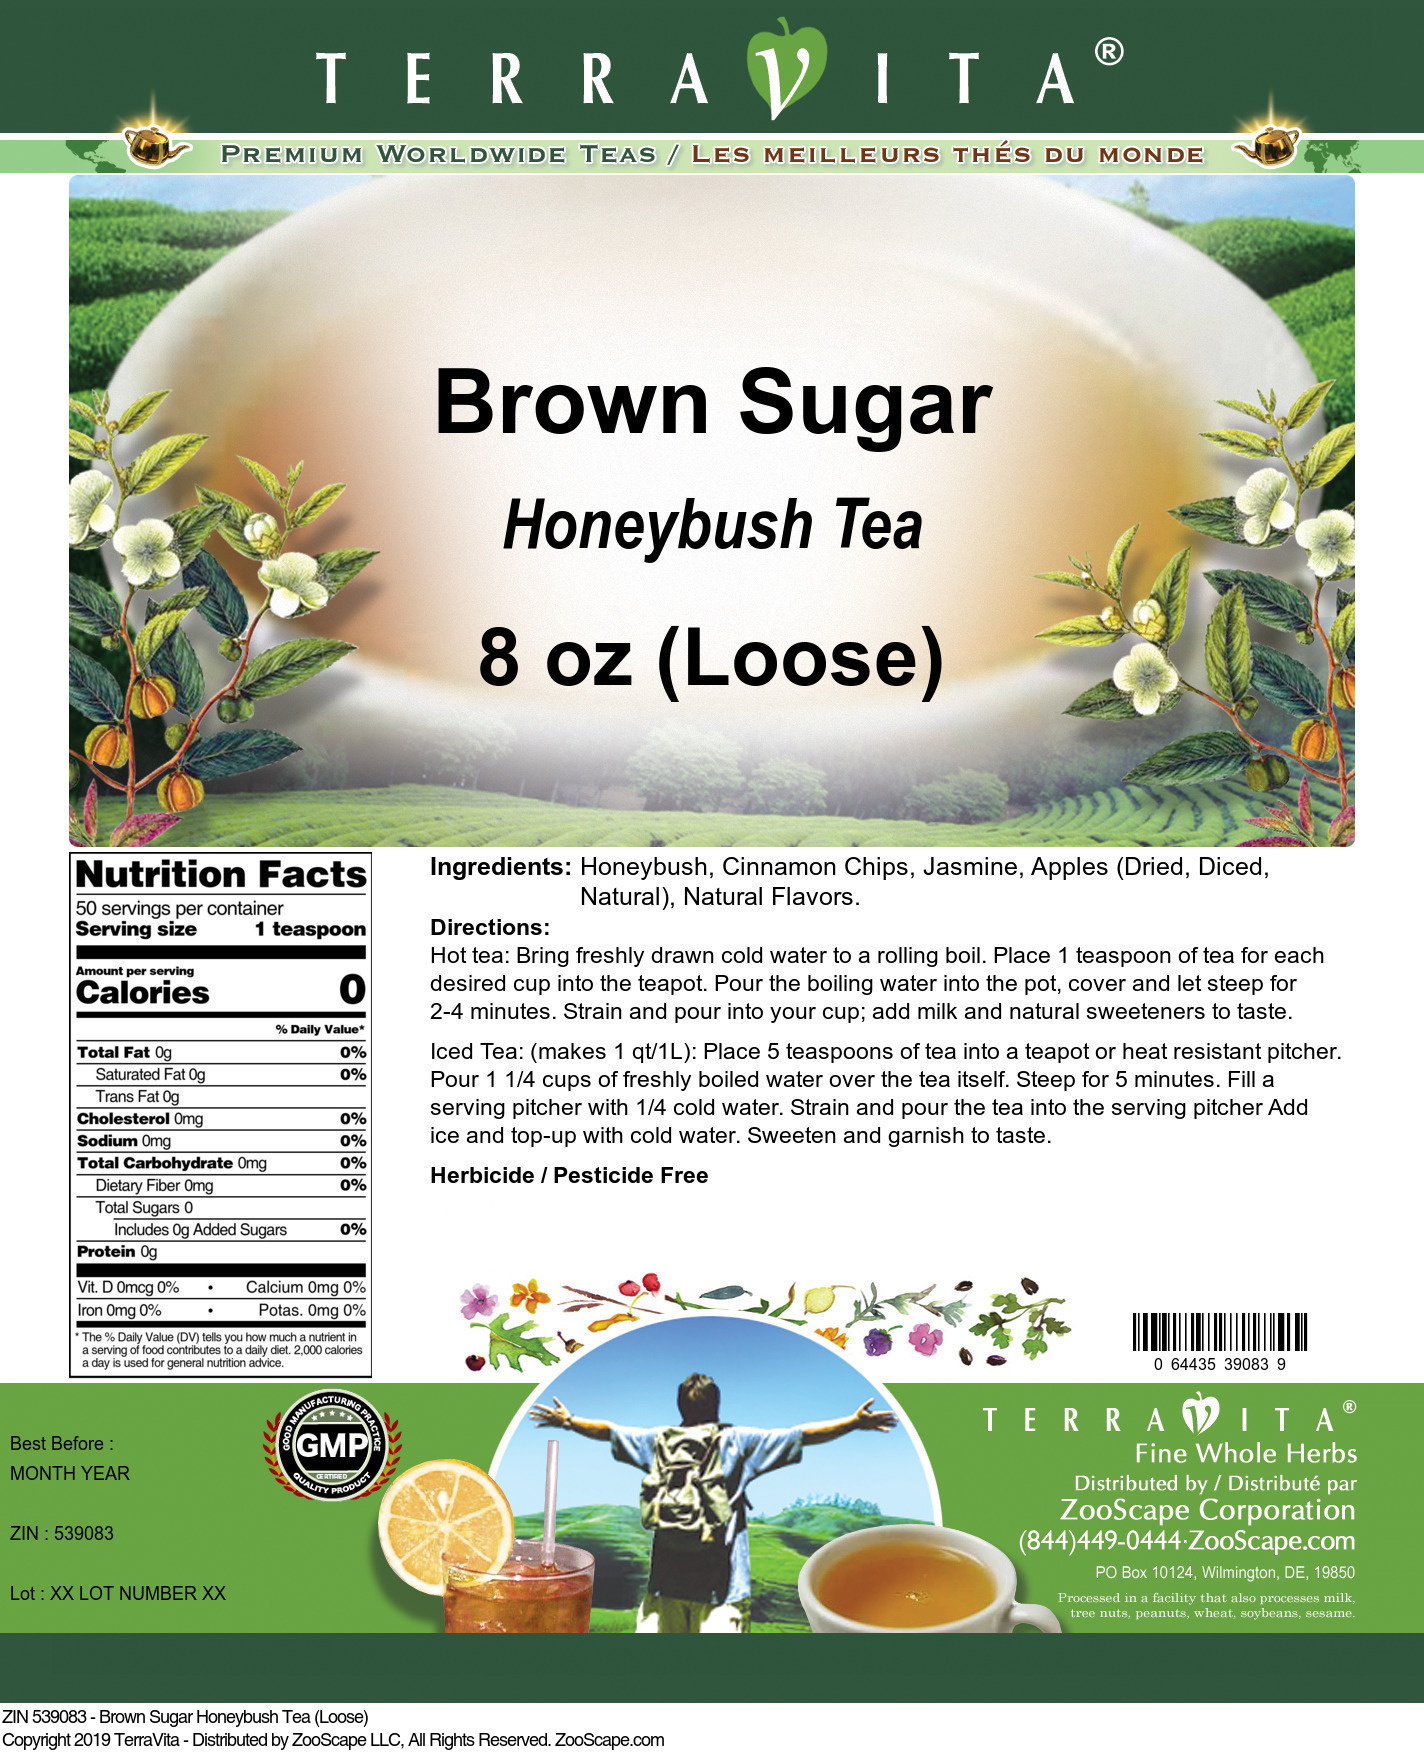 Brown Sugar Honeybush Tea (Loose) - Label